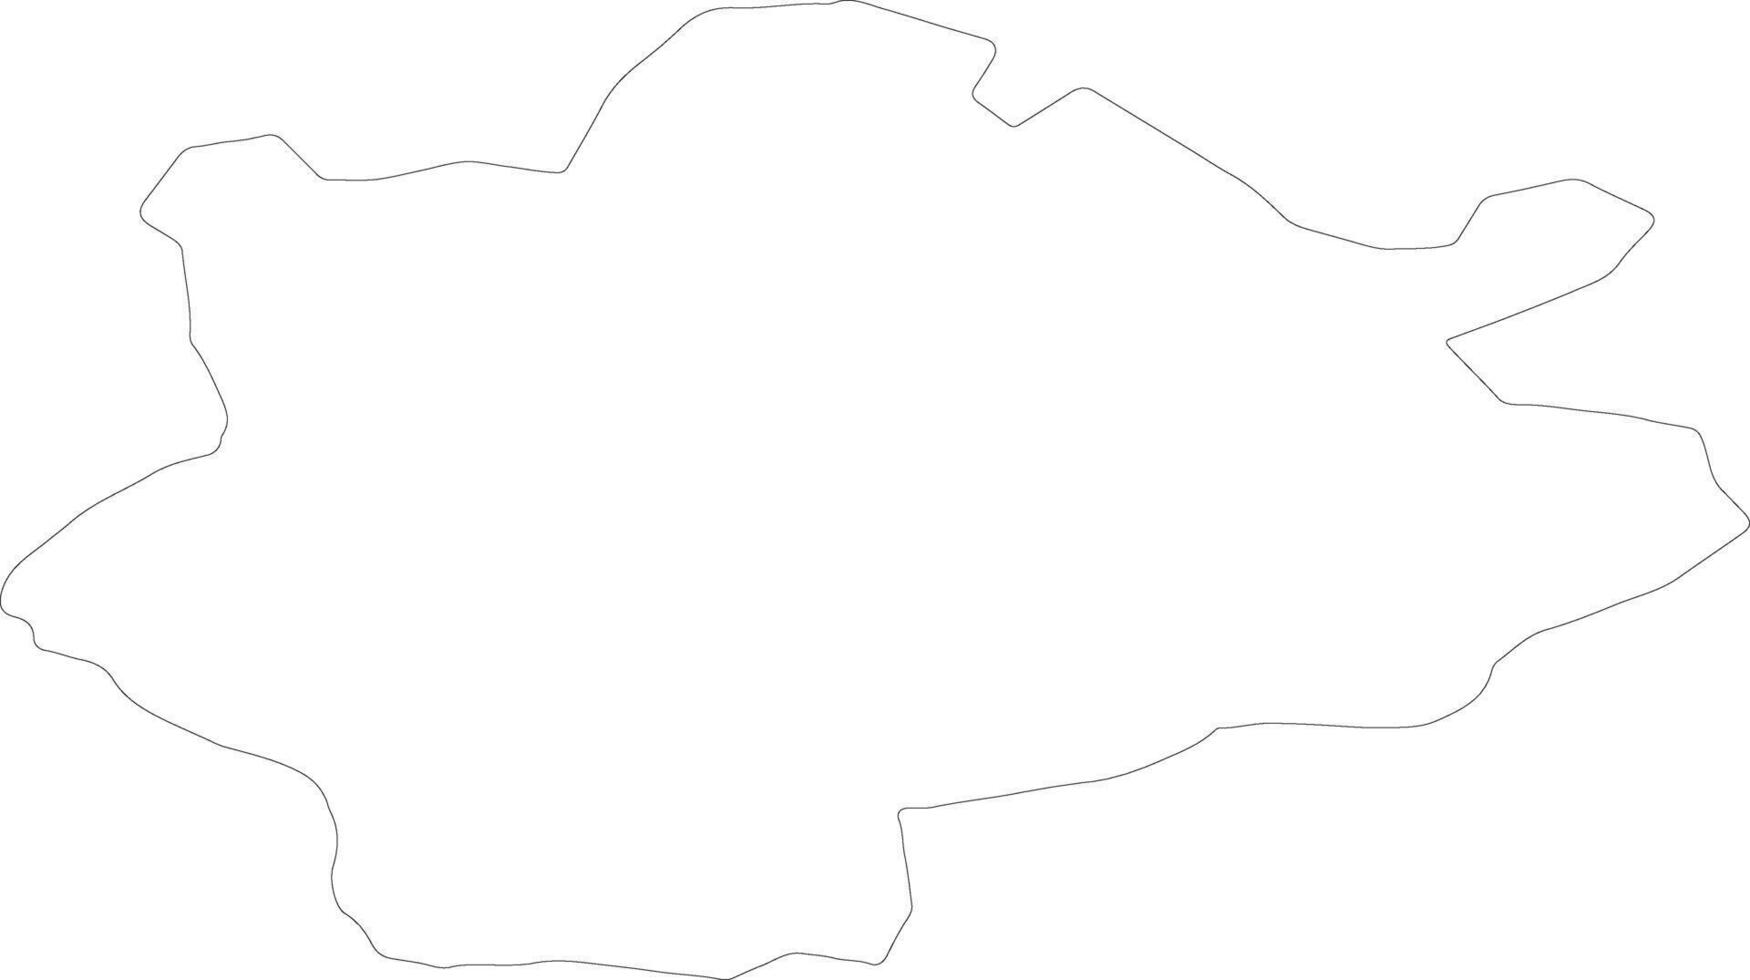 talsi Letland schets kaart vector